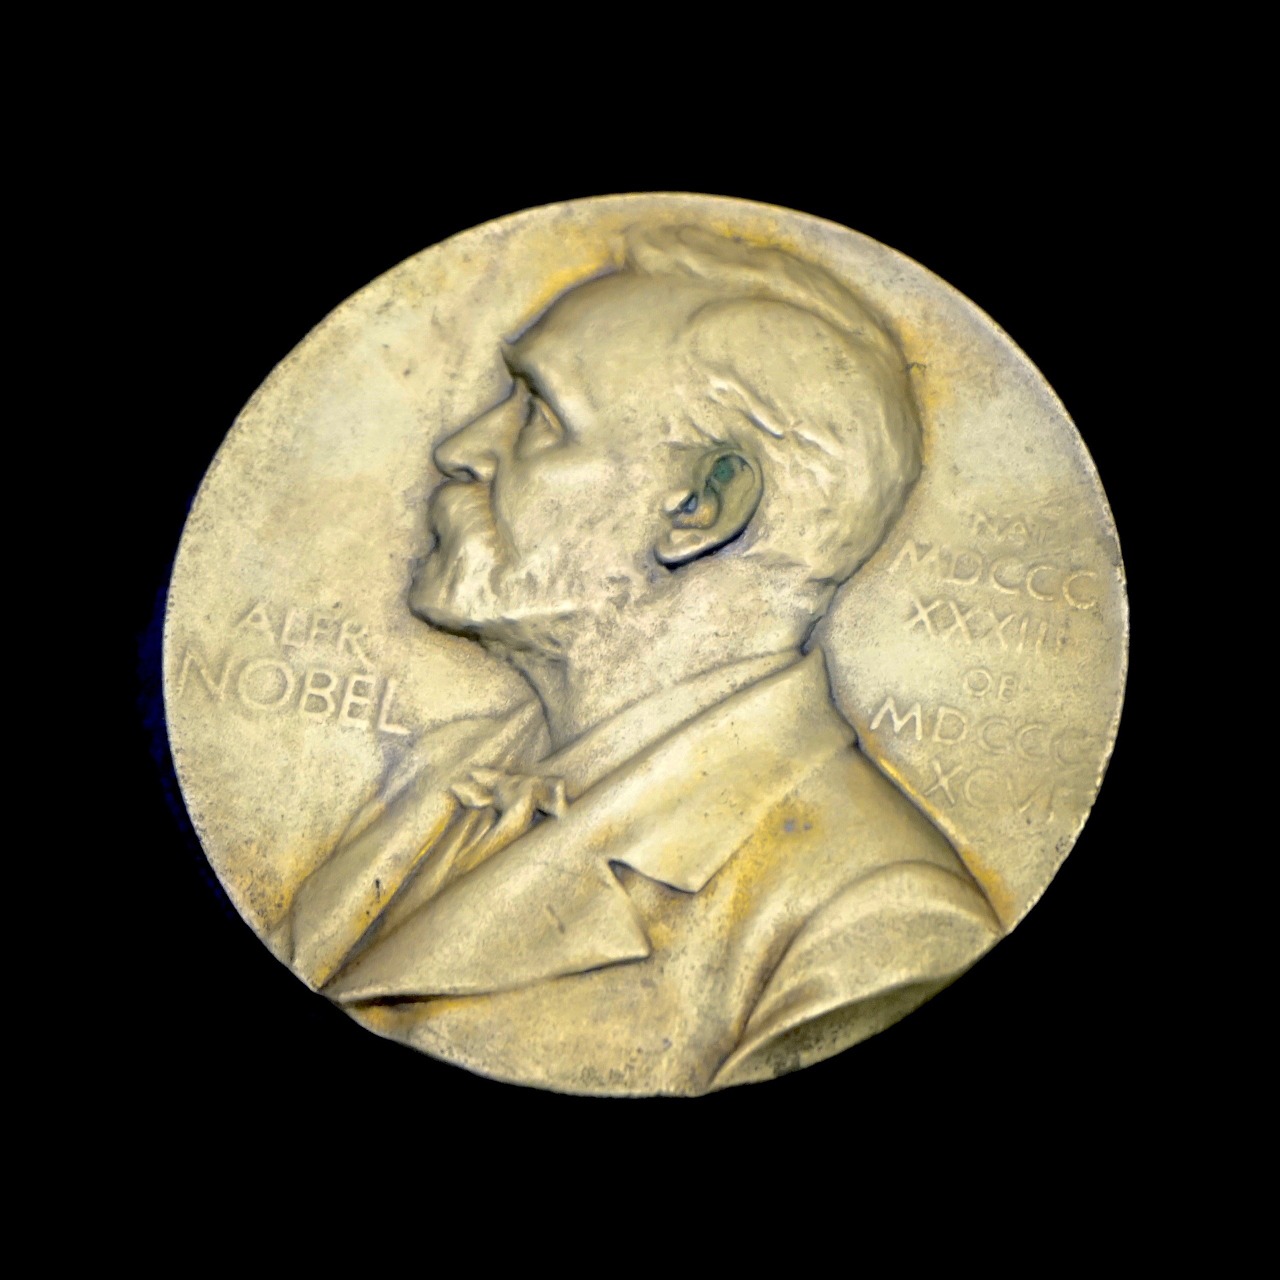 Physik Nobelpreis 2018